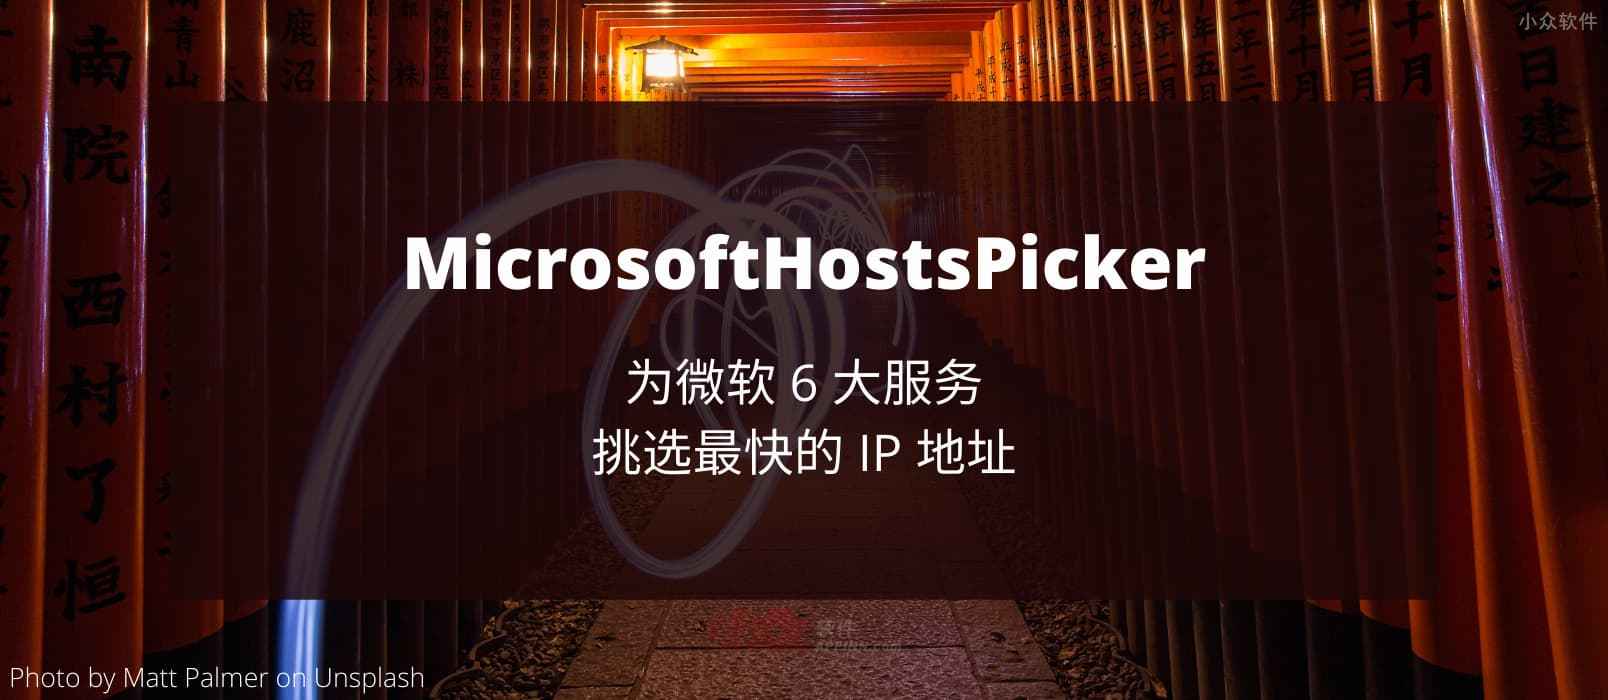 MicrosoftHostsPicker - 优选 IP 地址，解决 6 大「微软服务」连接缓慢问题